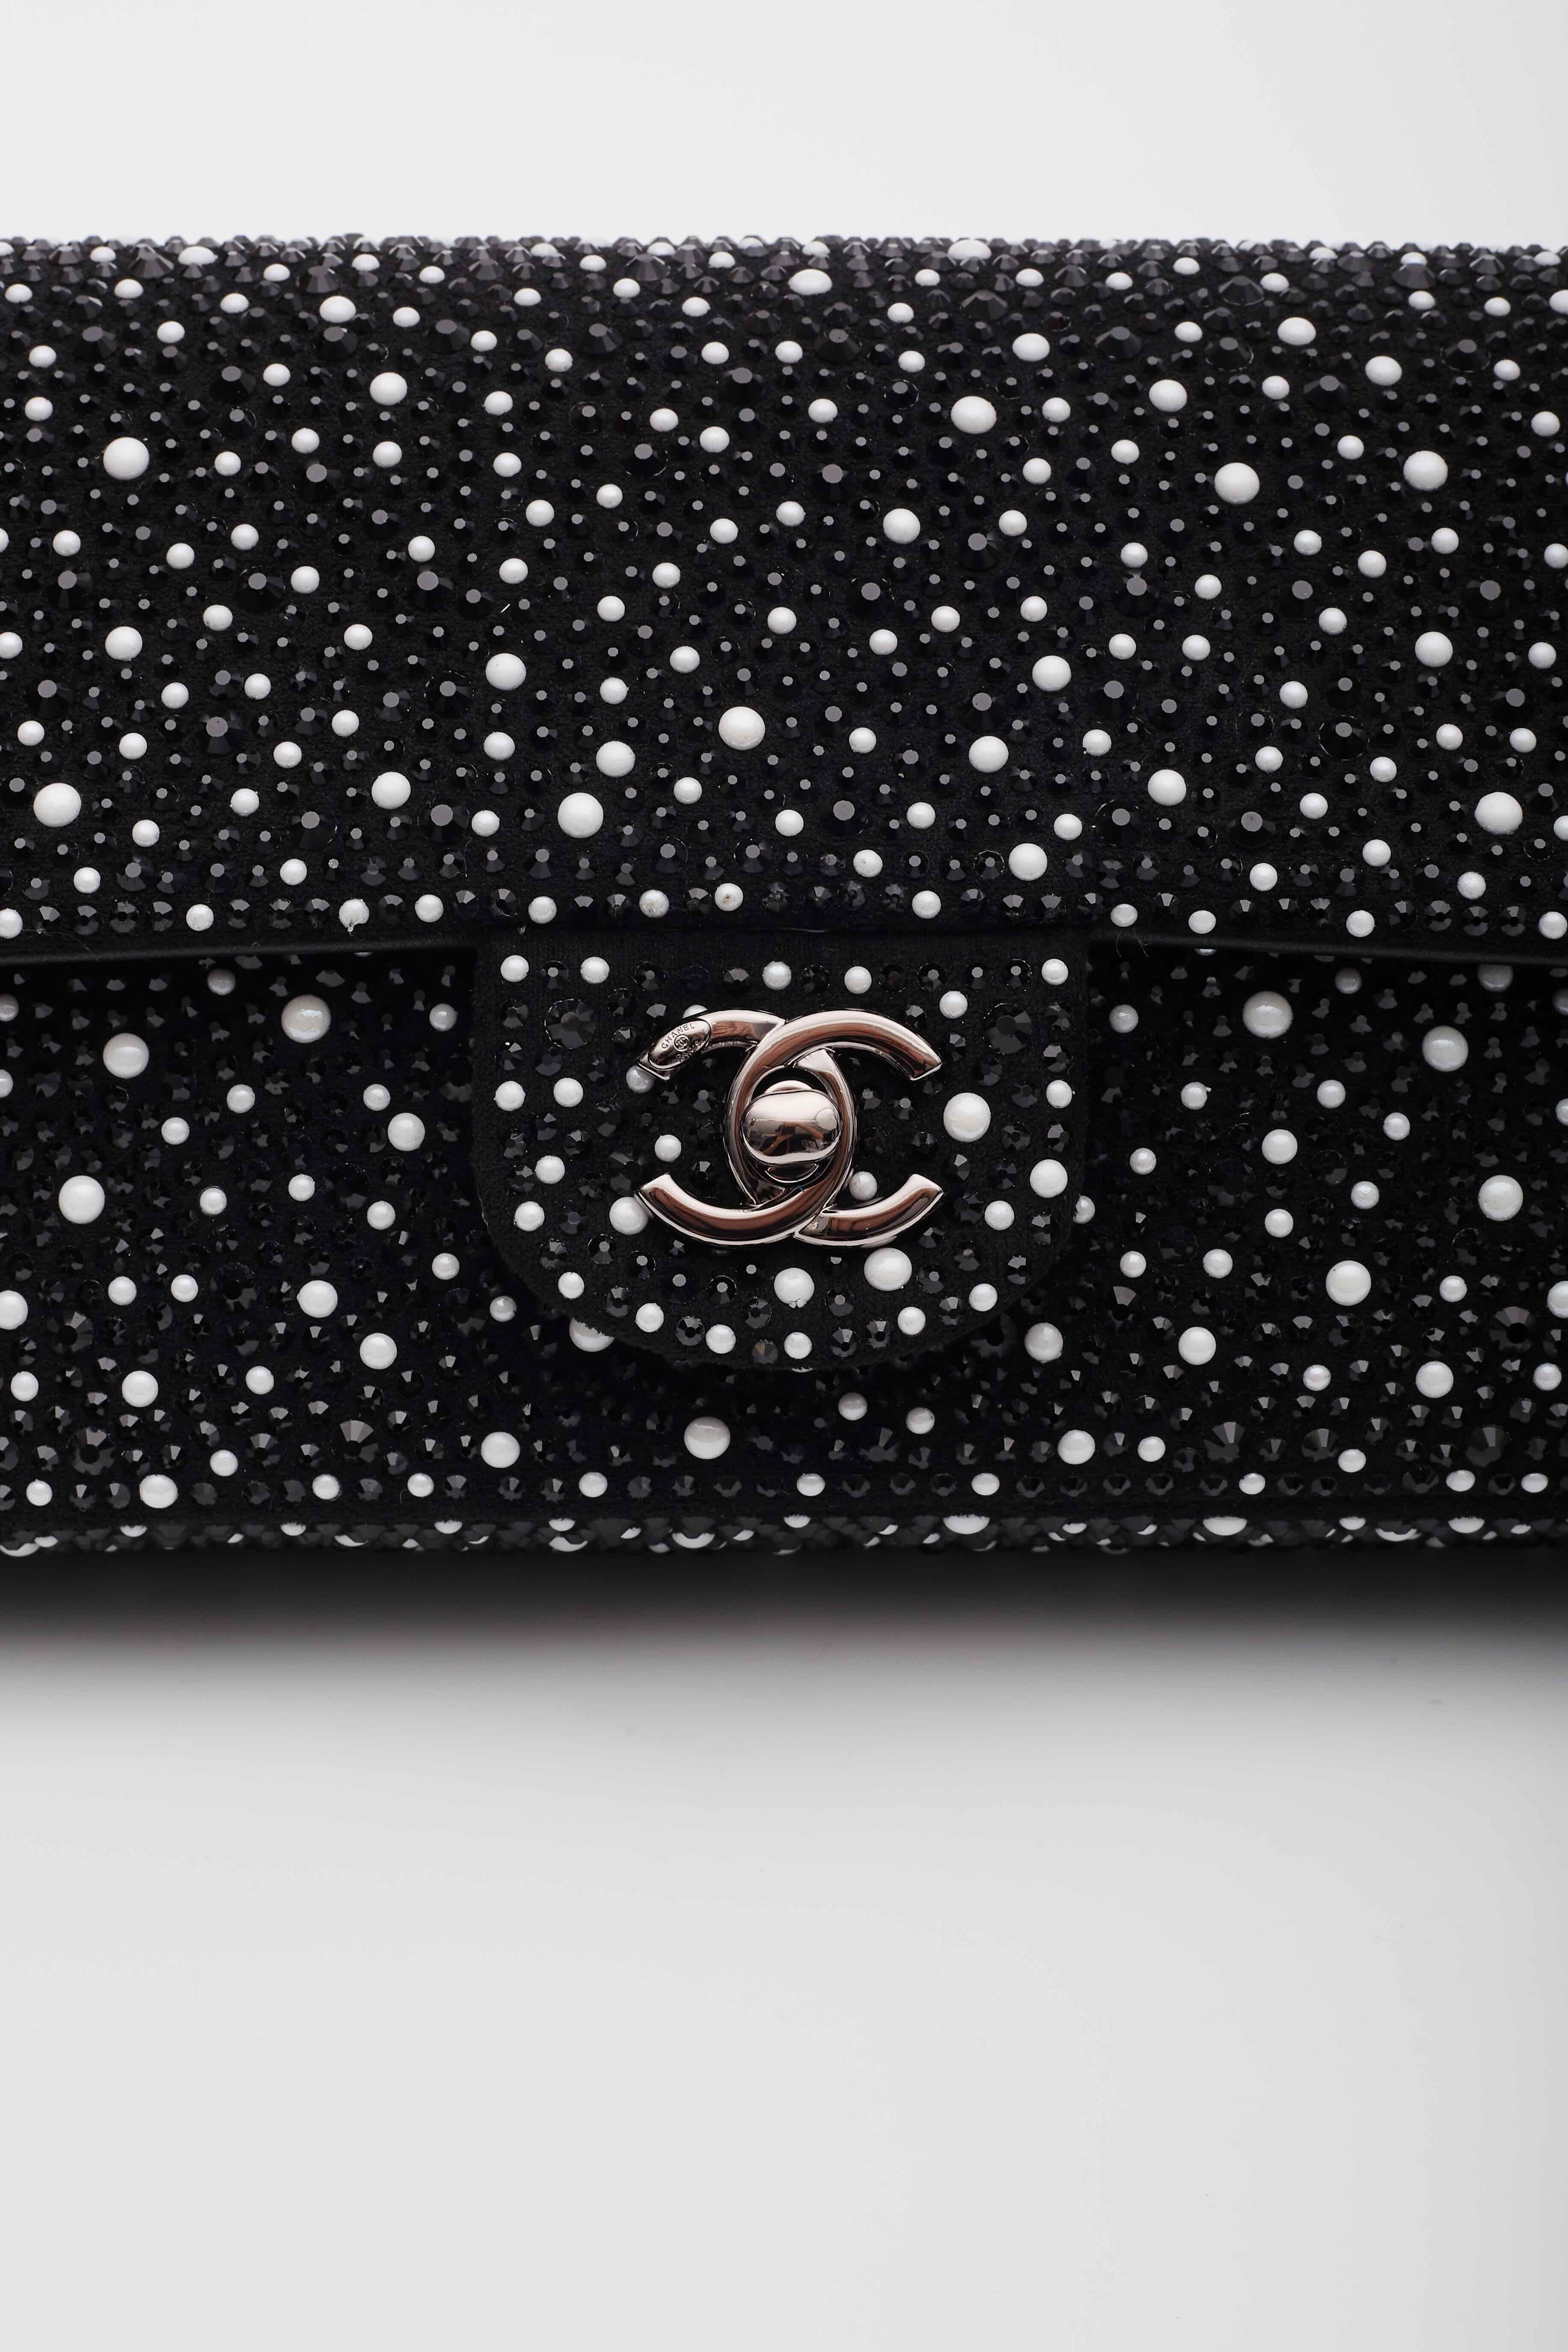 Chanel Strass Crystal Pearls & Ruthenium Metal Shoulder Bag Black & White 1